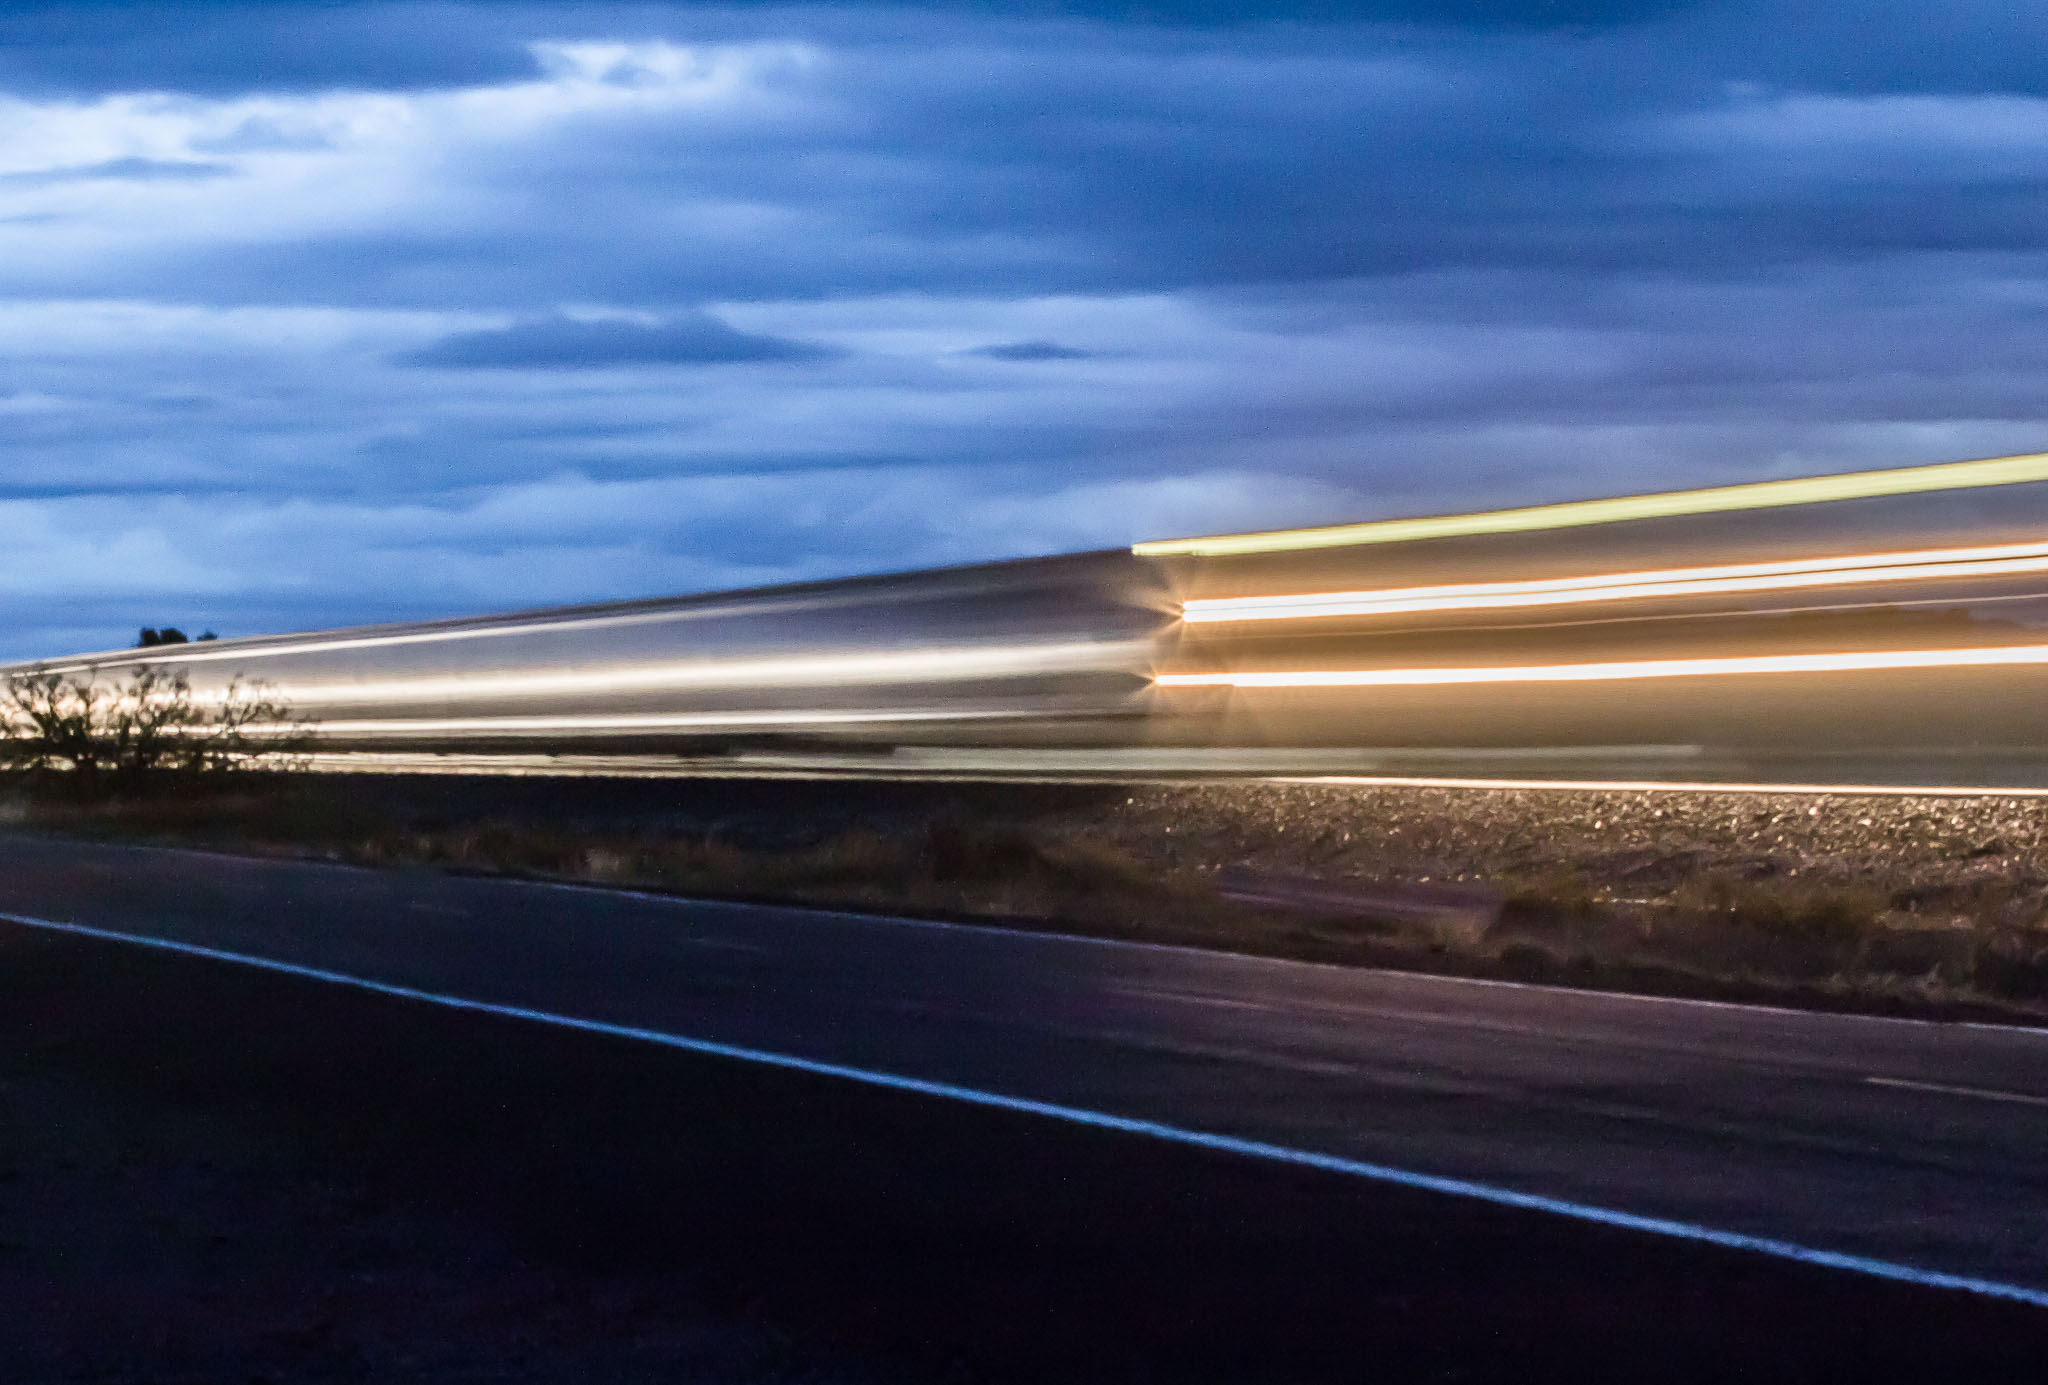 Freight train passing in the night, Bosque del Apache National Wildlife Refuge, San Antonio NM, November 5, 2016